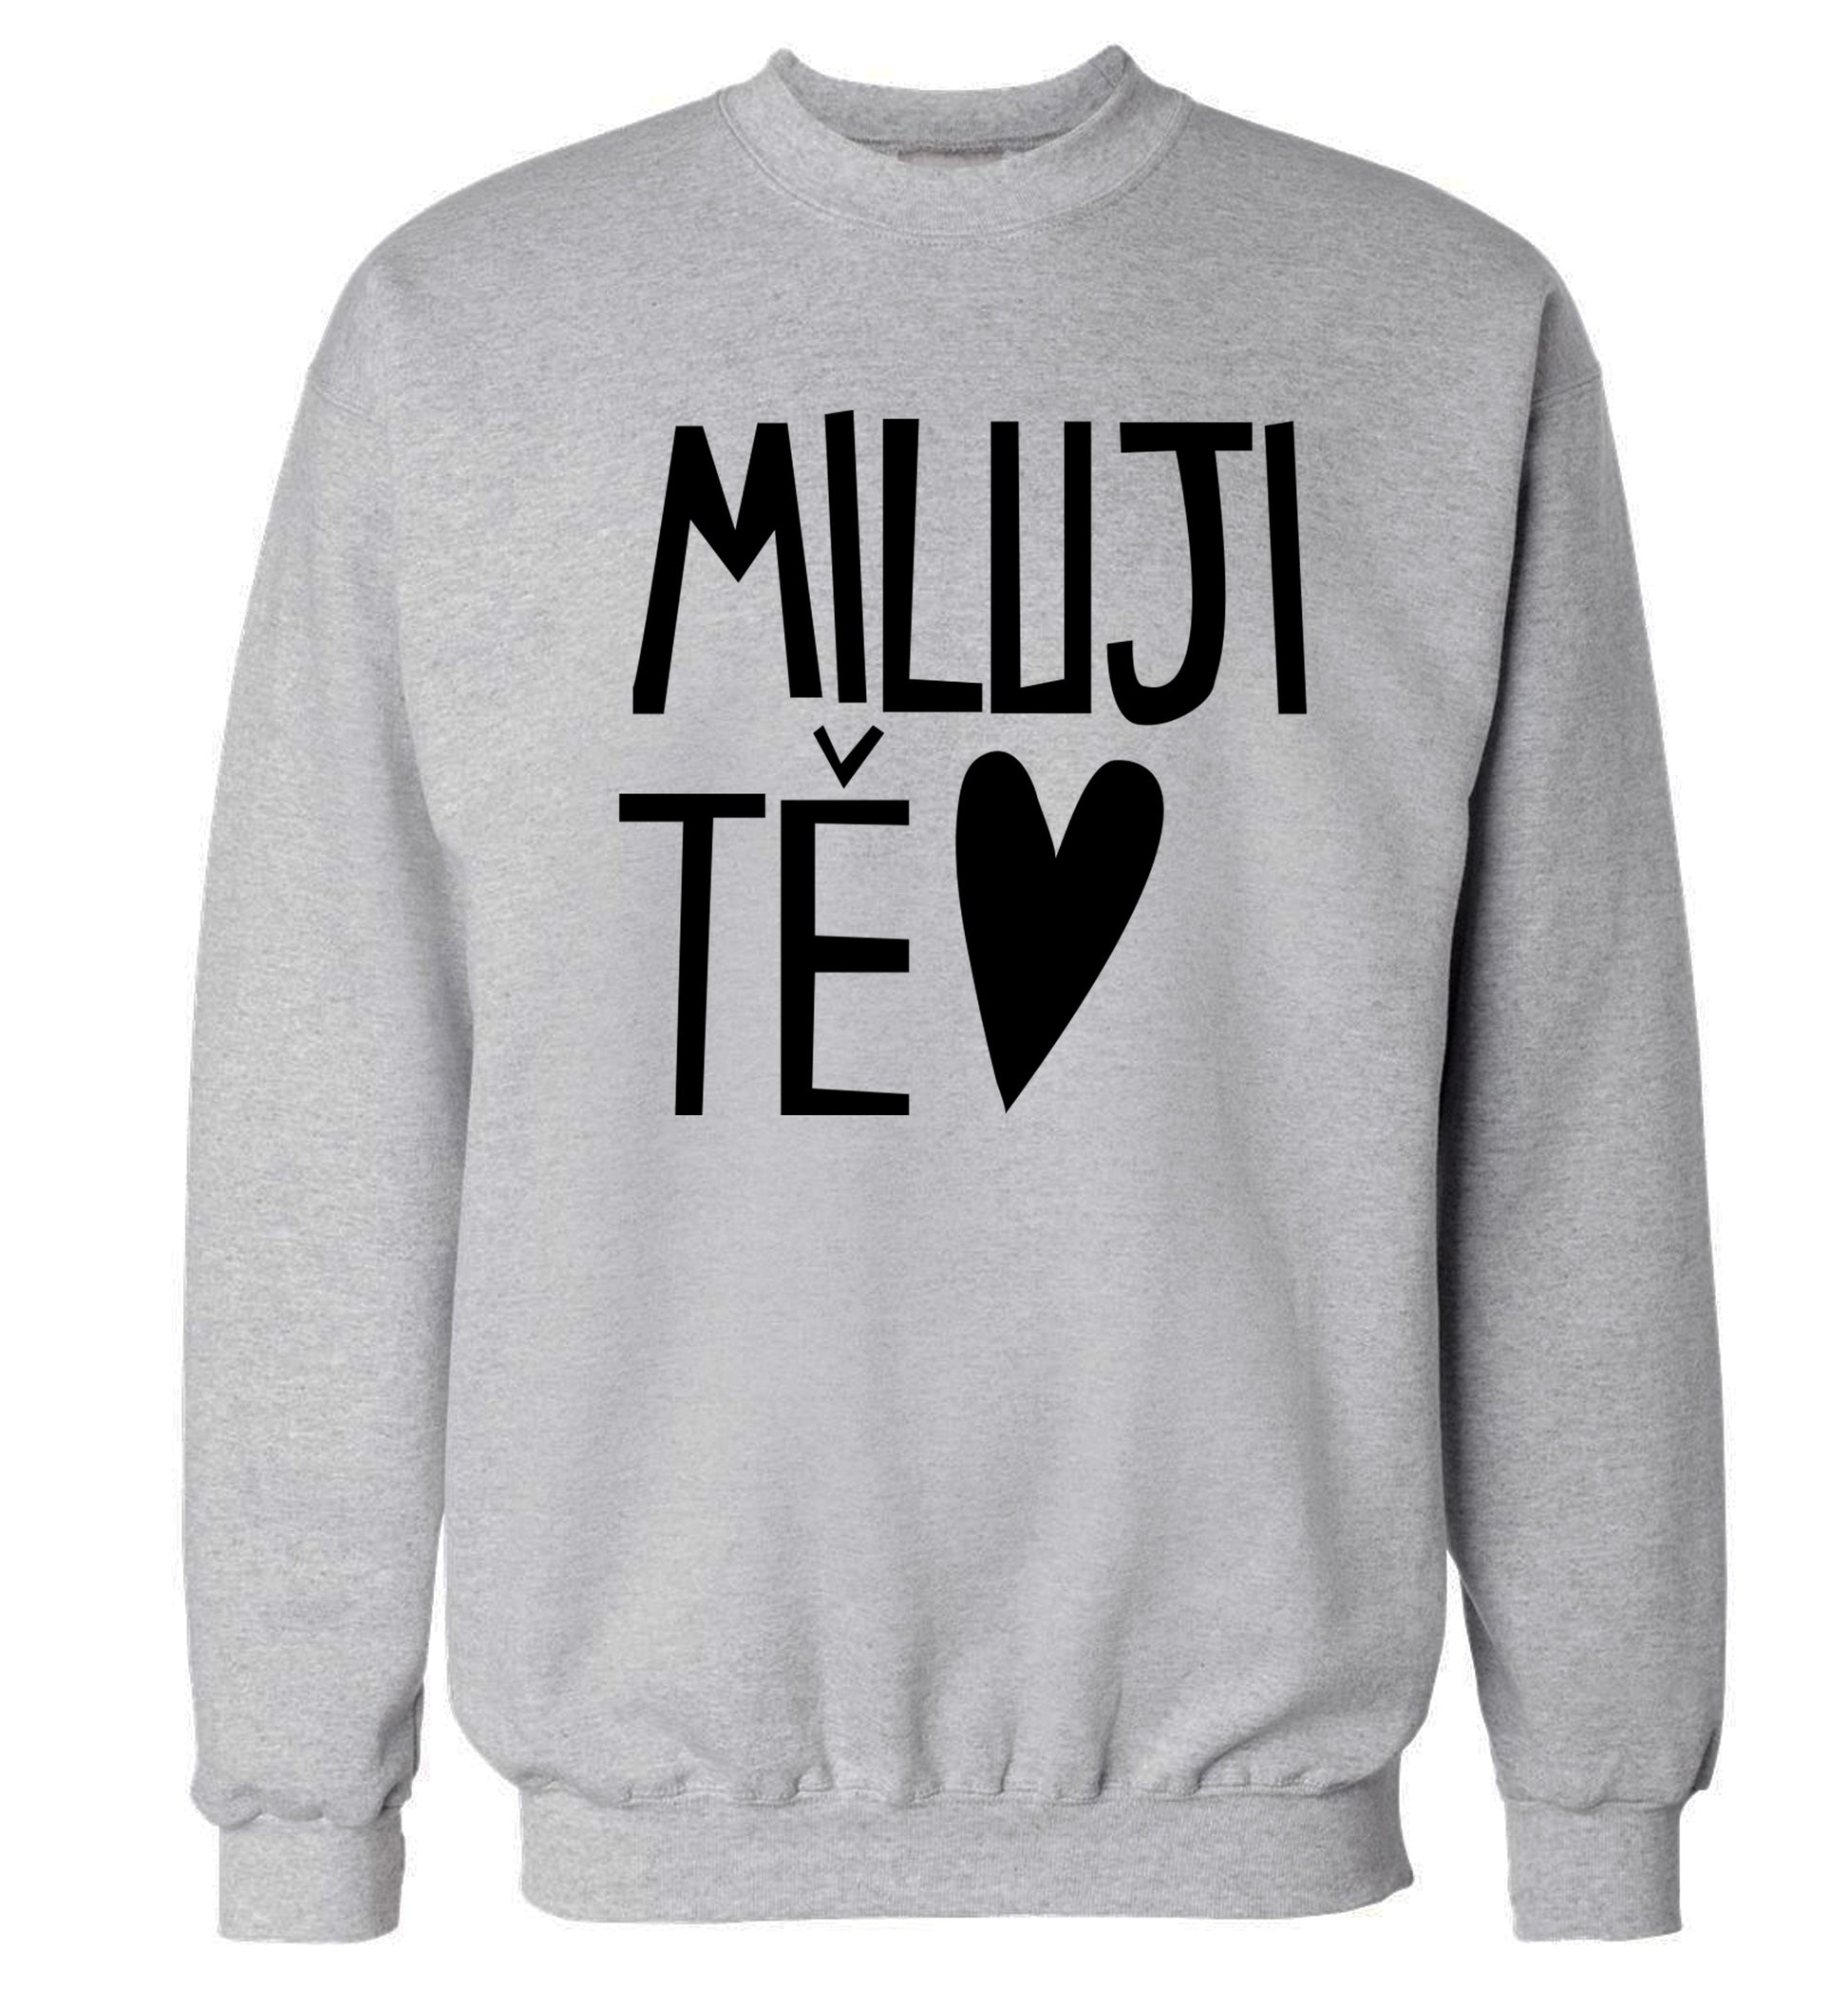 Miluji T_ - I love you Adult's unisex grey Sweater 2XL